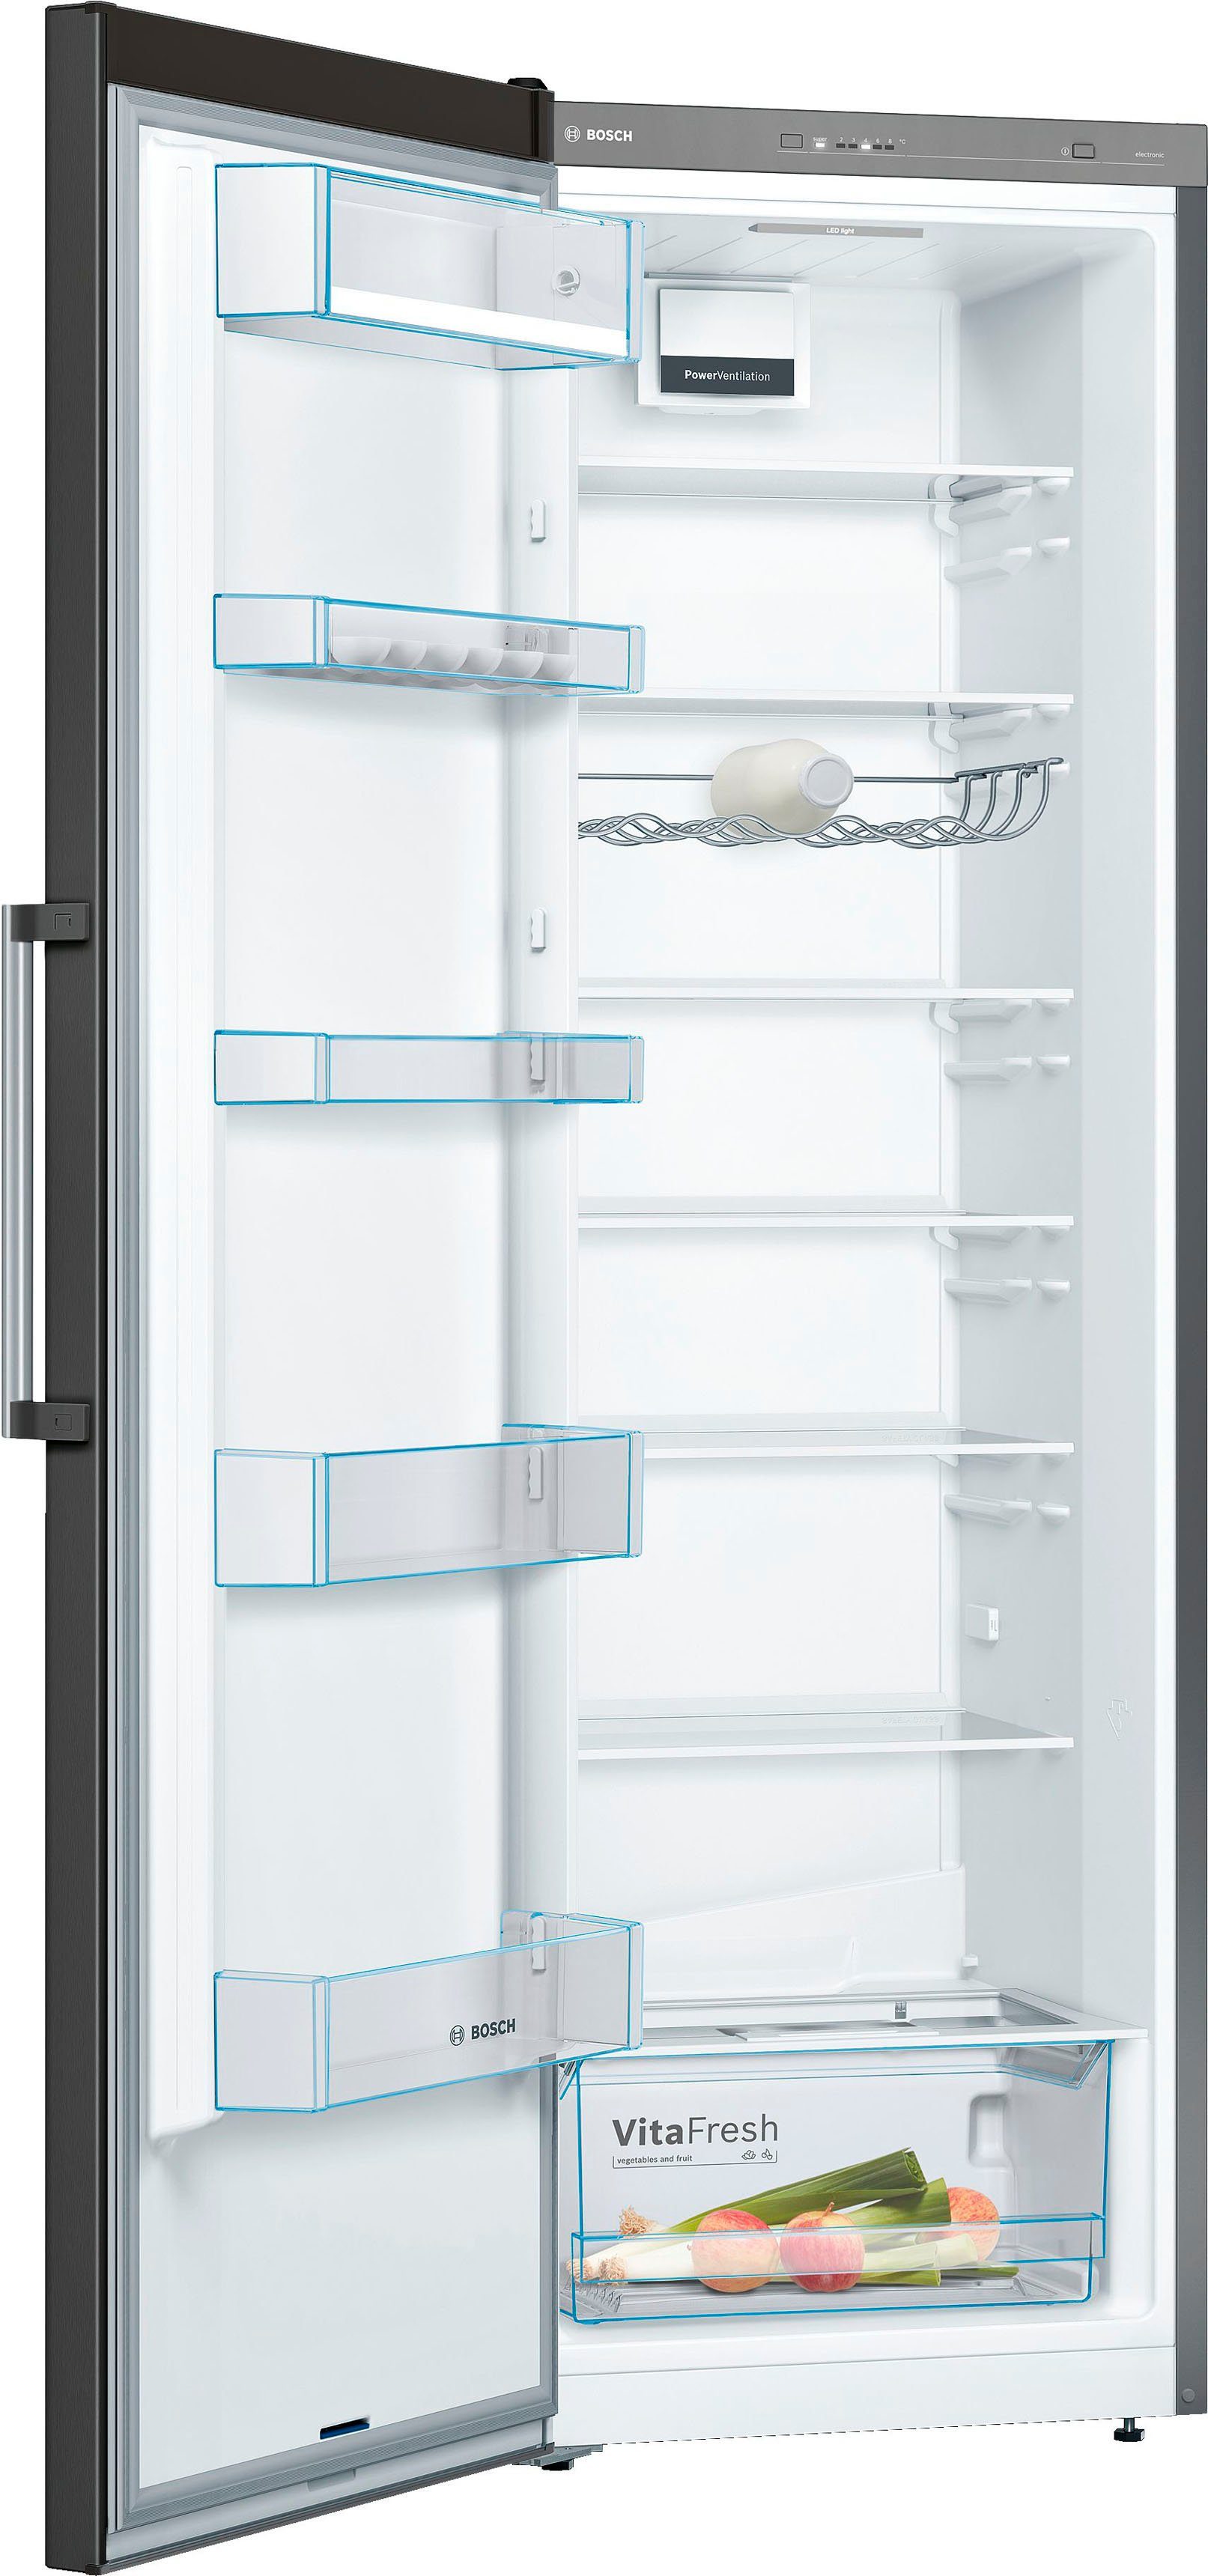 BOSCH Kühlschrank 186 cm breit cm KSV36VXEP, hoch, 60